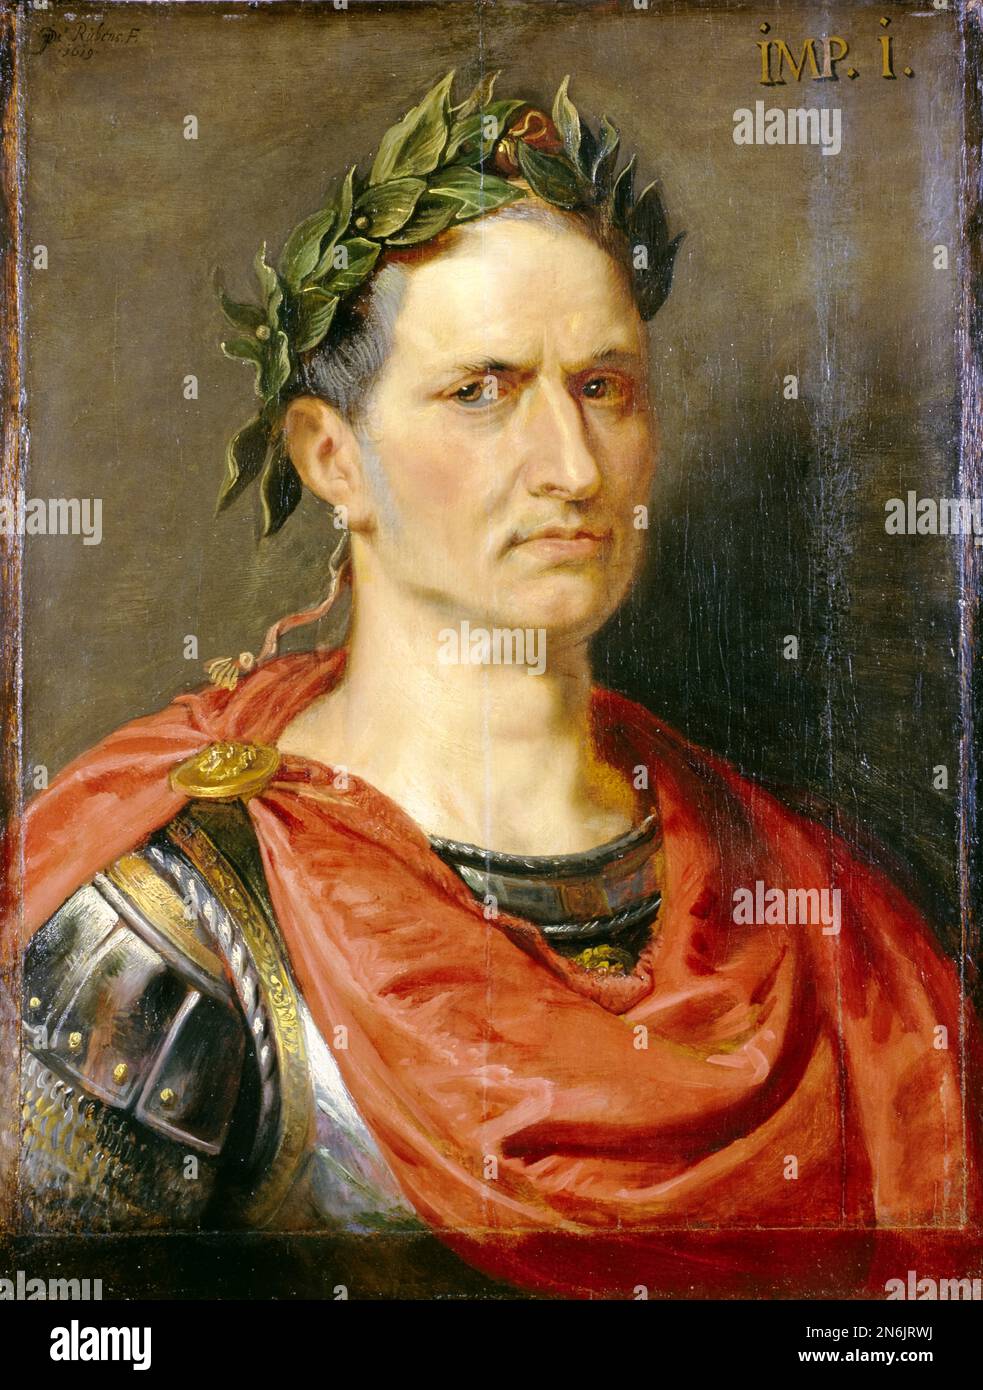 Gaius Julius Caesar, (100BC-44BC), Roman General and Dictator, portrait painting in oil on wood by Peter Paul Rubens, 1616-1625 Stock Photo